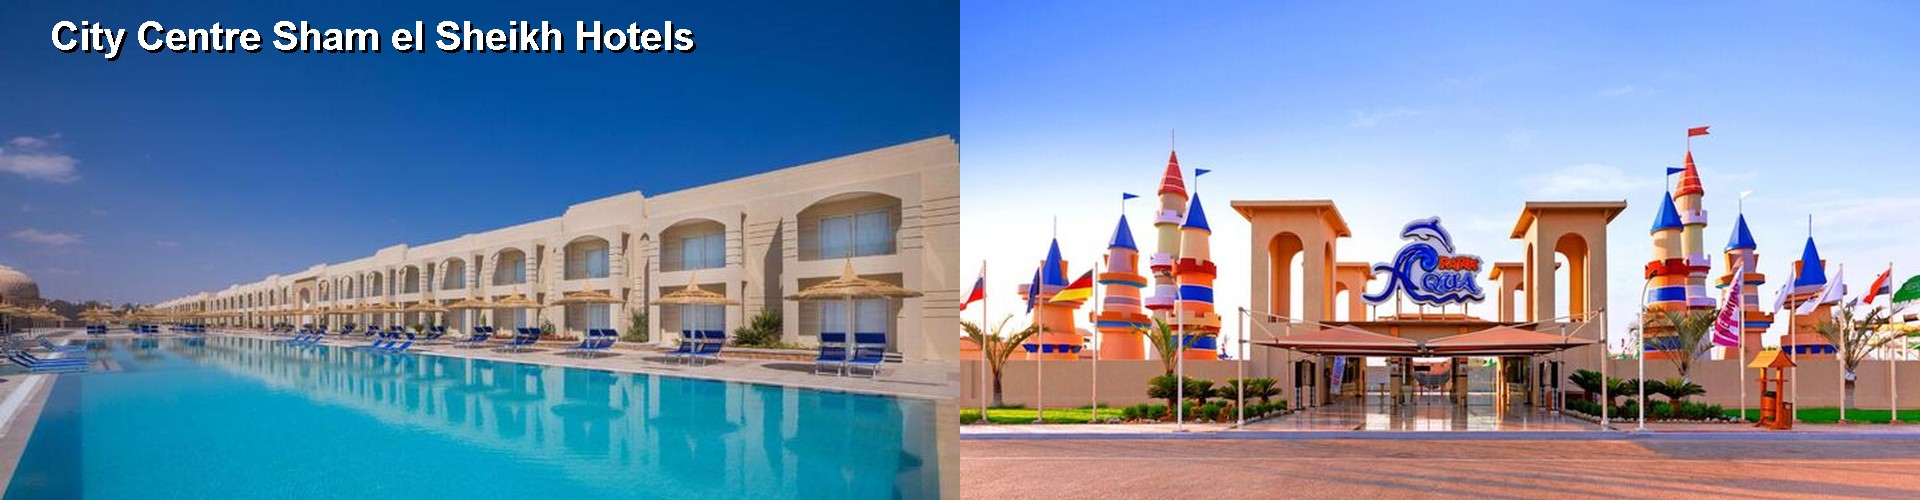 5 Best Hotels near City Centre Sham el Sheikh